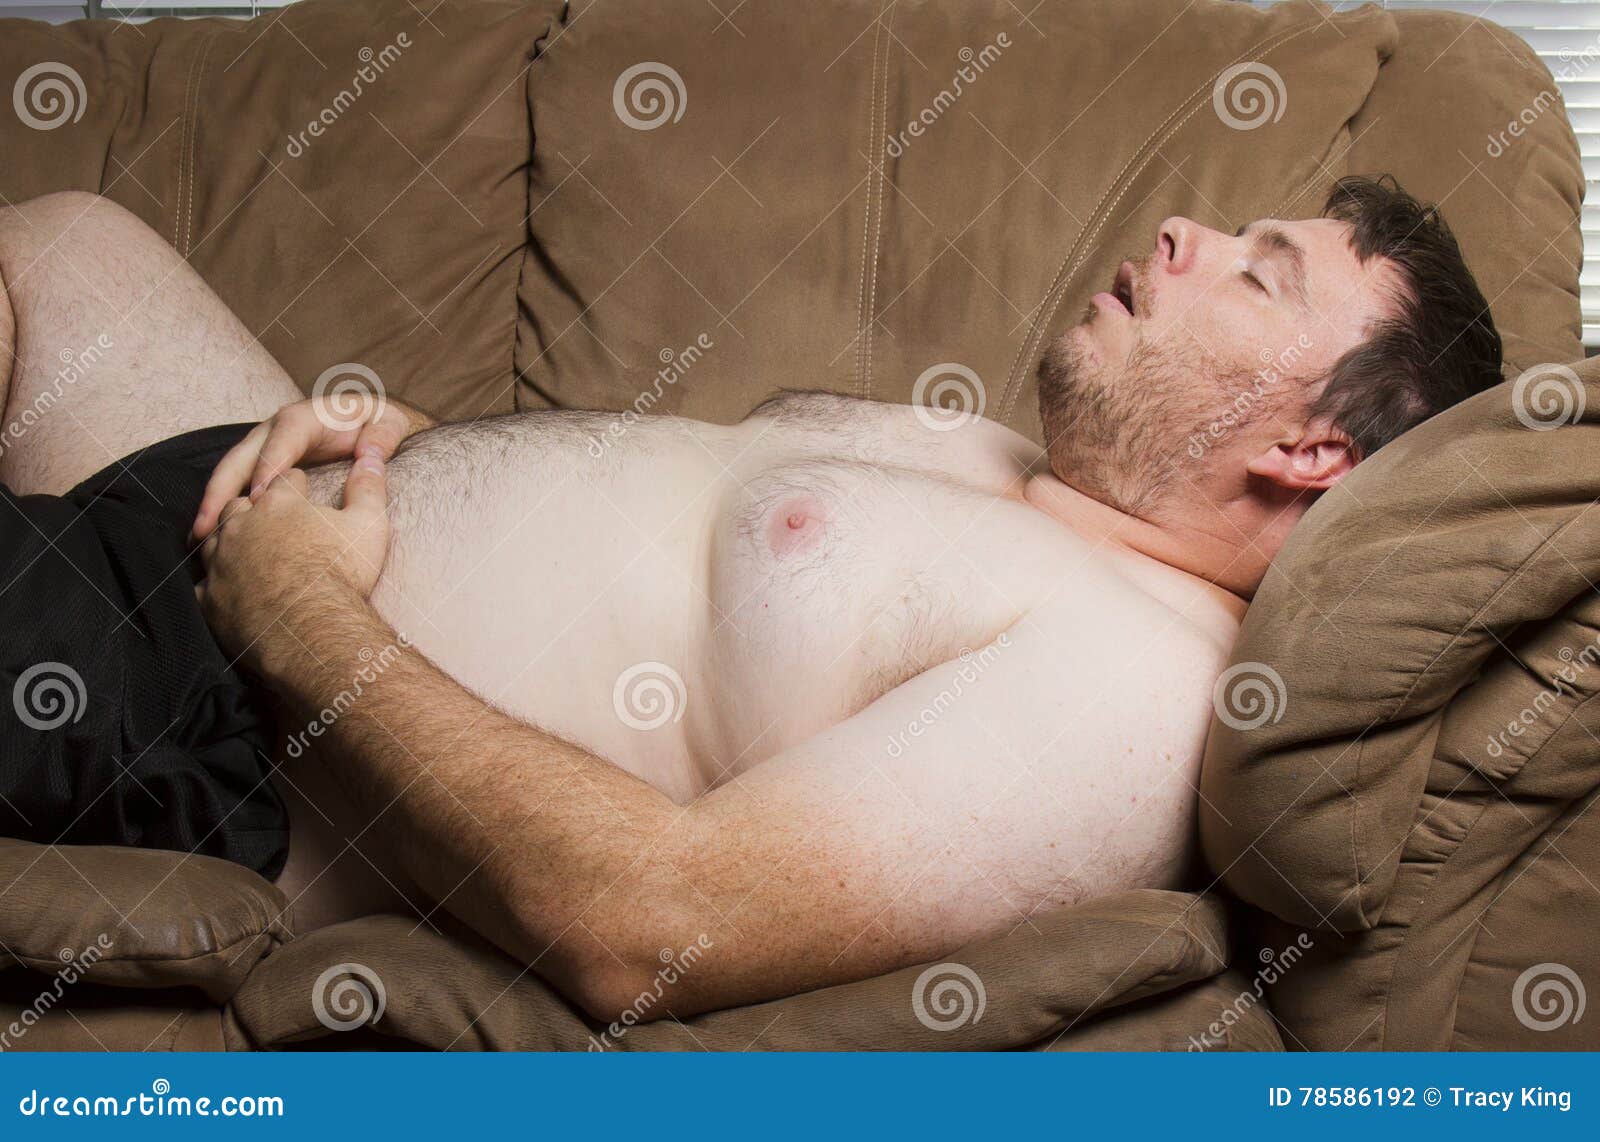 fat-man-asleep-sleeping-topless-couch-78586192.jpg